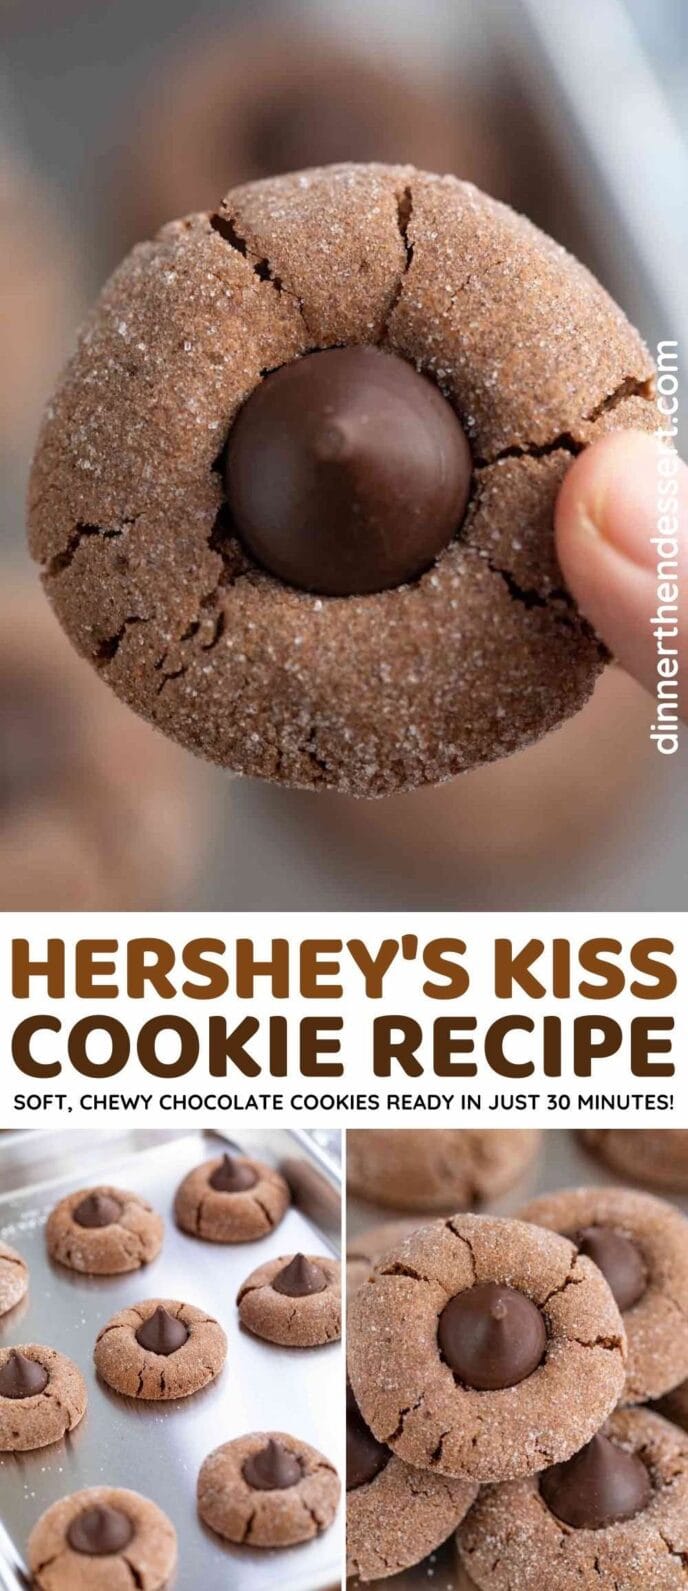 Hershey's Kiss Chocolate Cookies